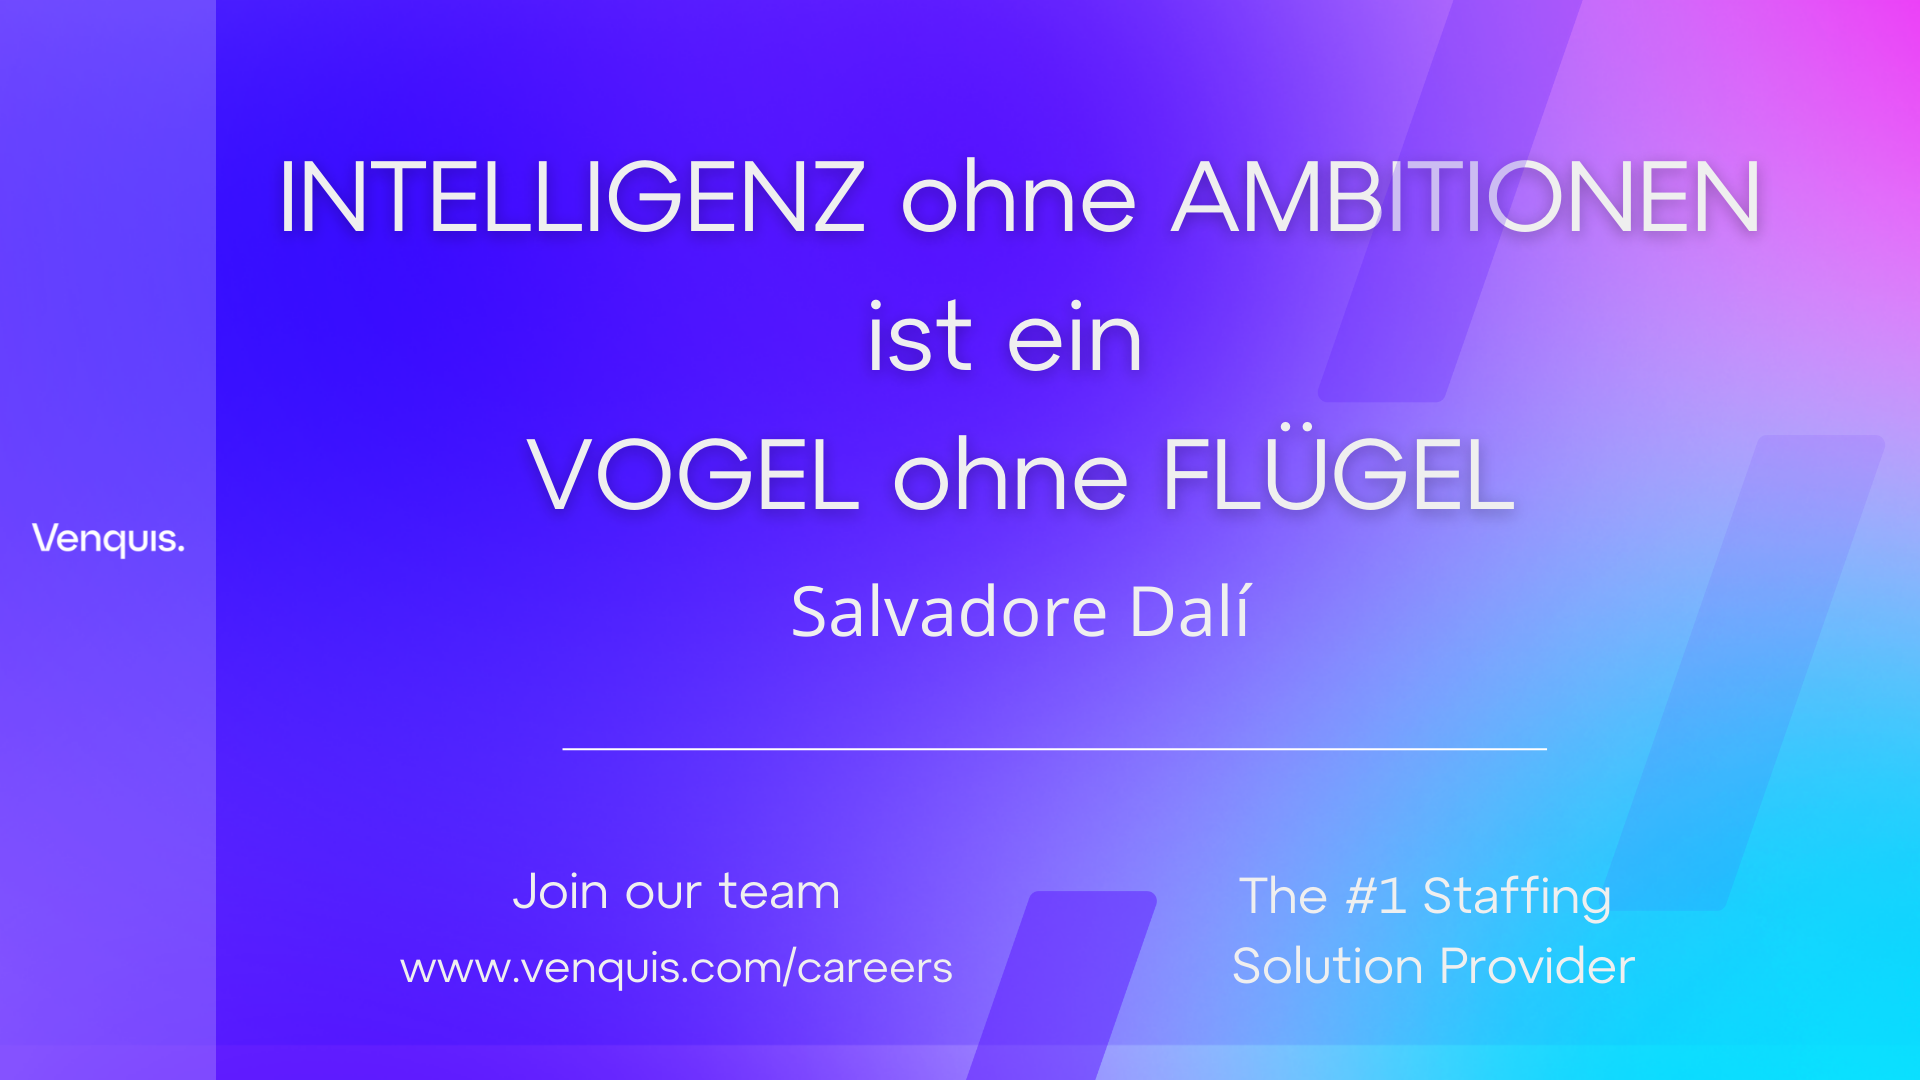 INTELLIGENZ ohne AMBITI
ist ein
VOGEL ohne FLU

Salvadore

 
      
 
    

Venquis.

Join our team

www.venquis.com/careers